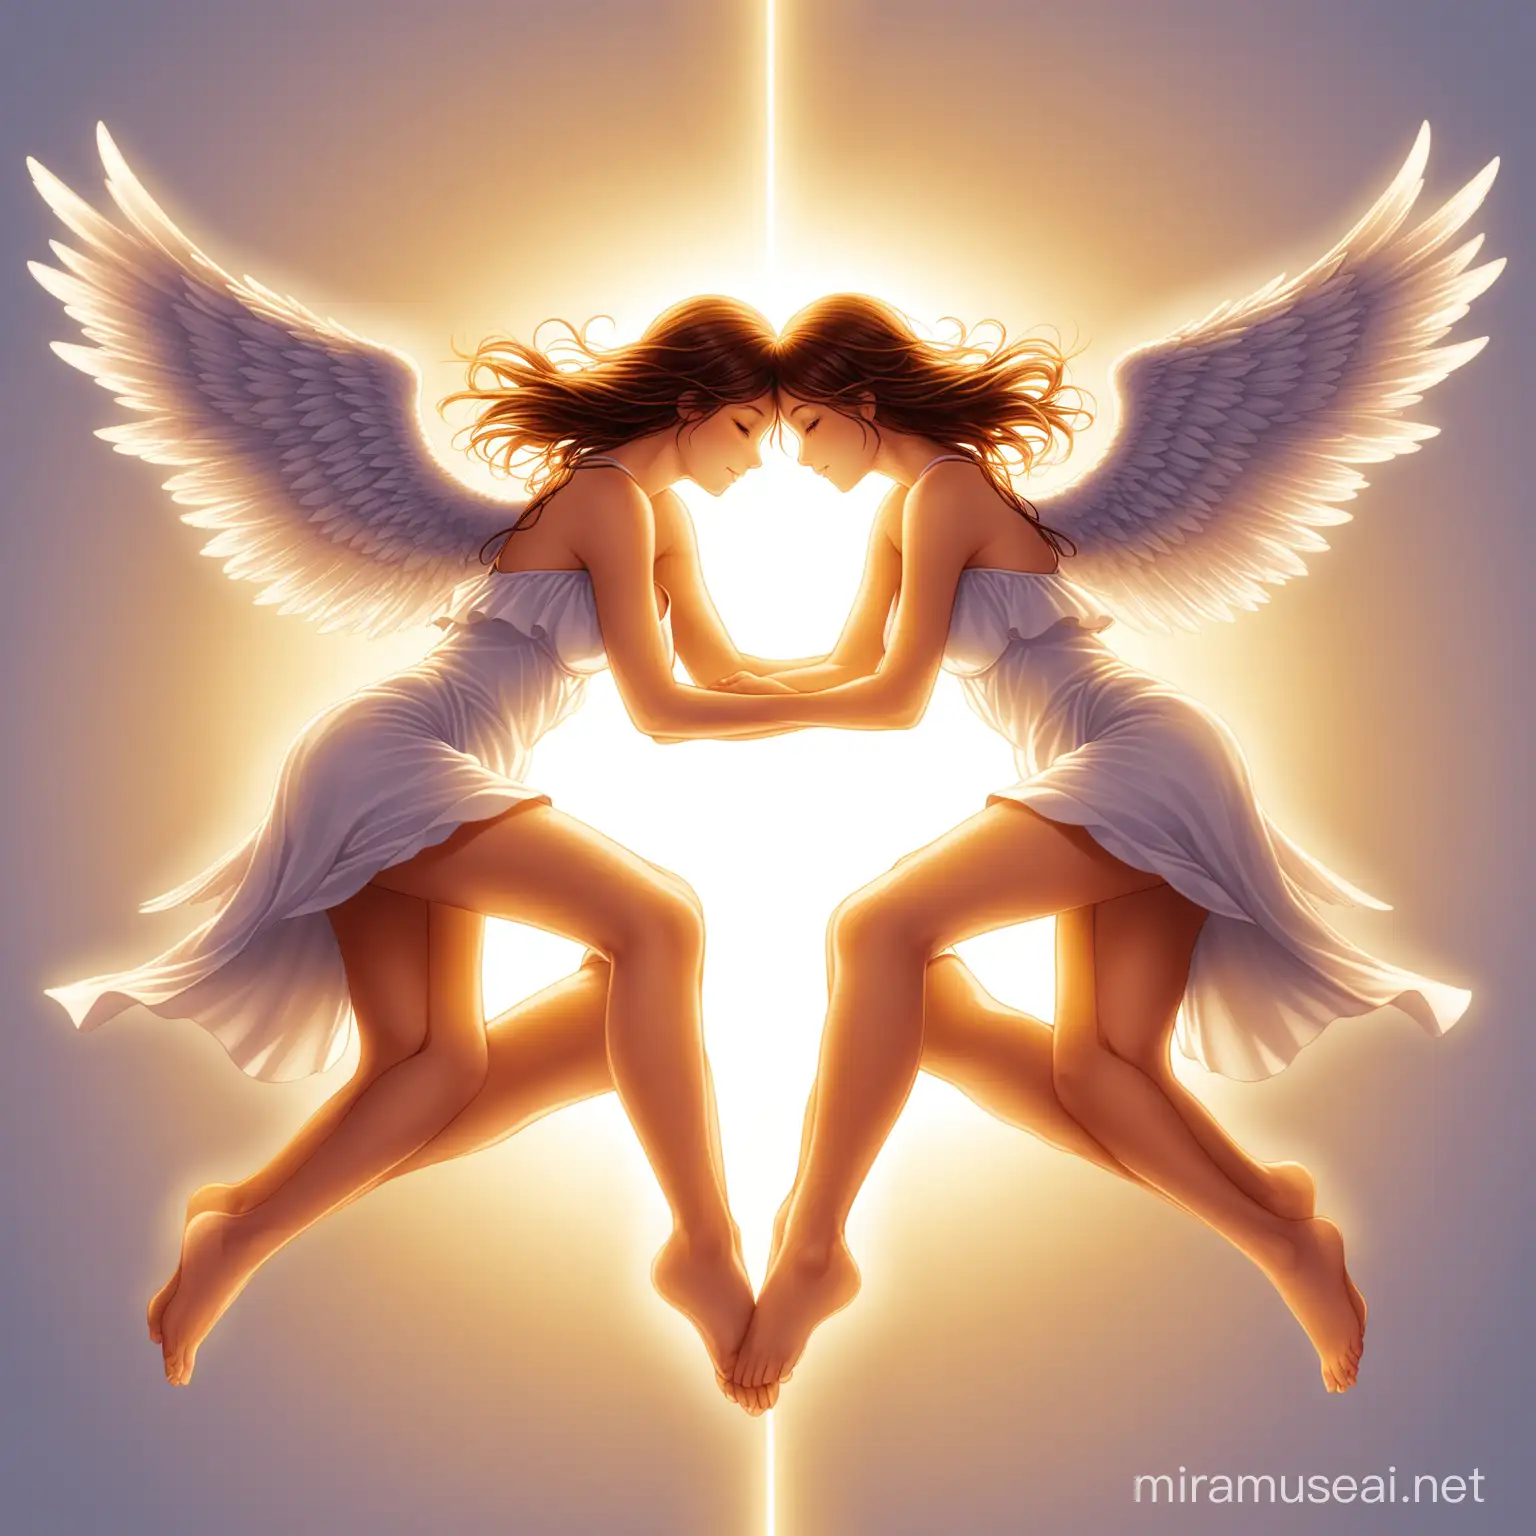 Interlocking Angels in Harmonious Dance